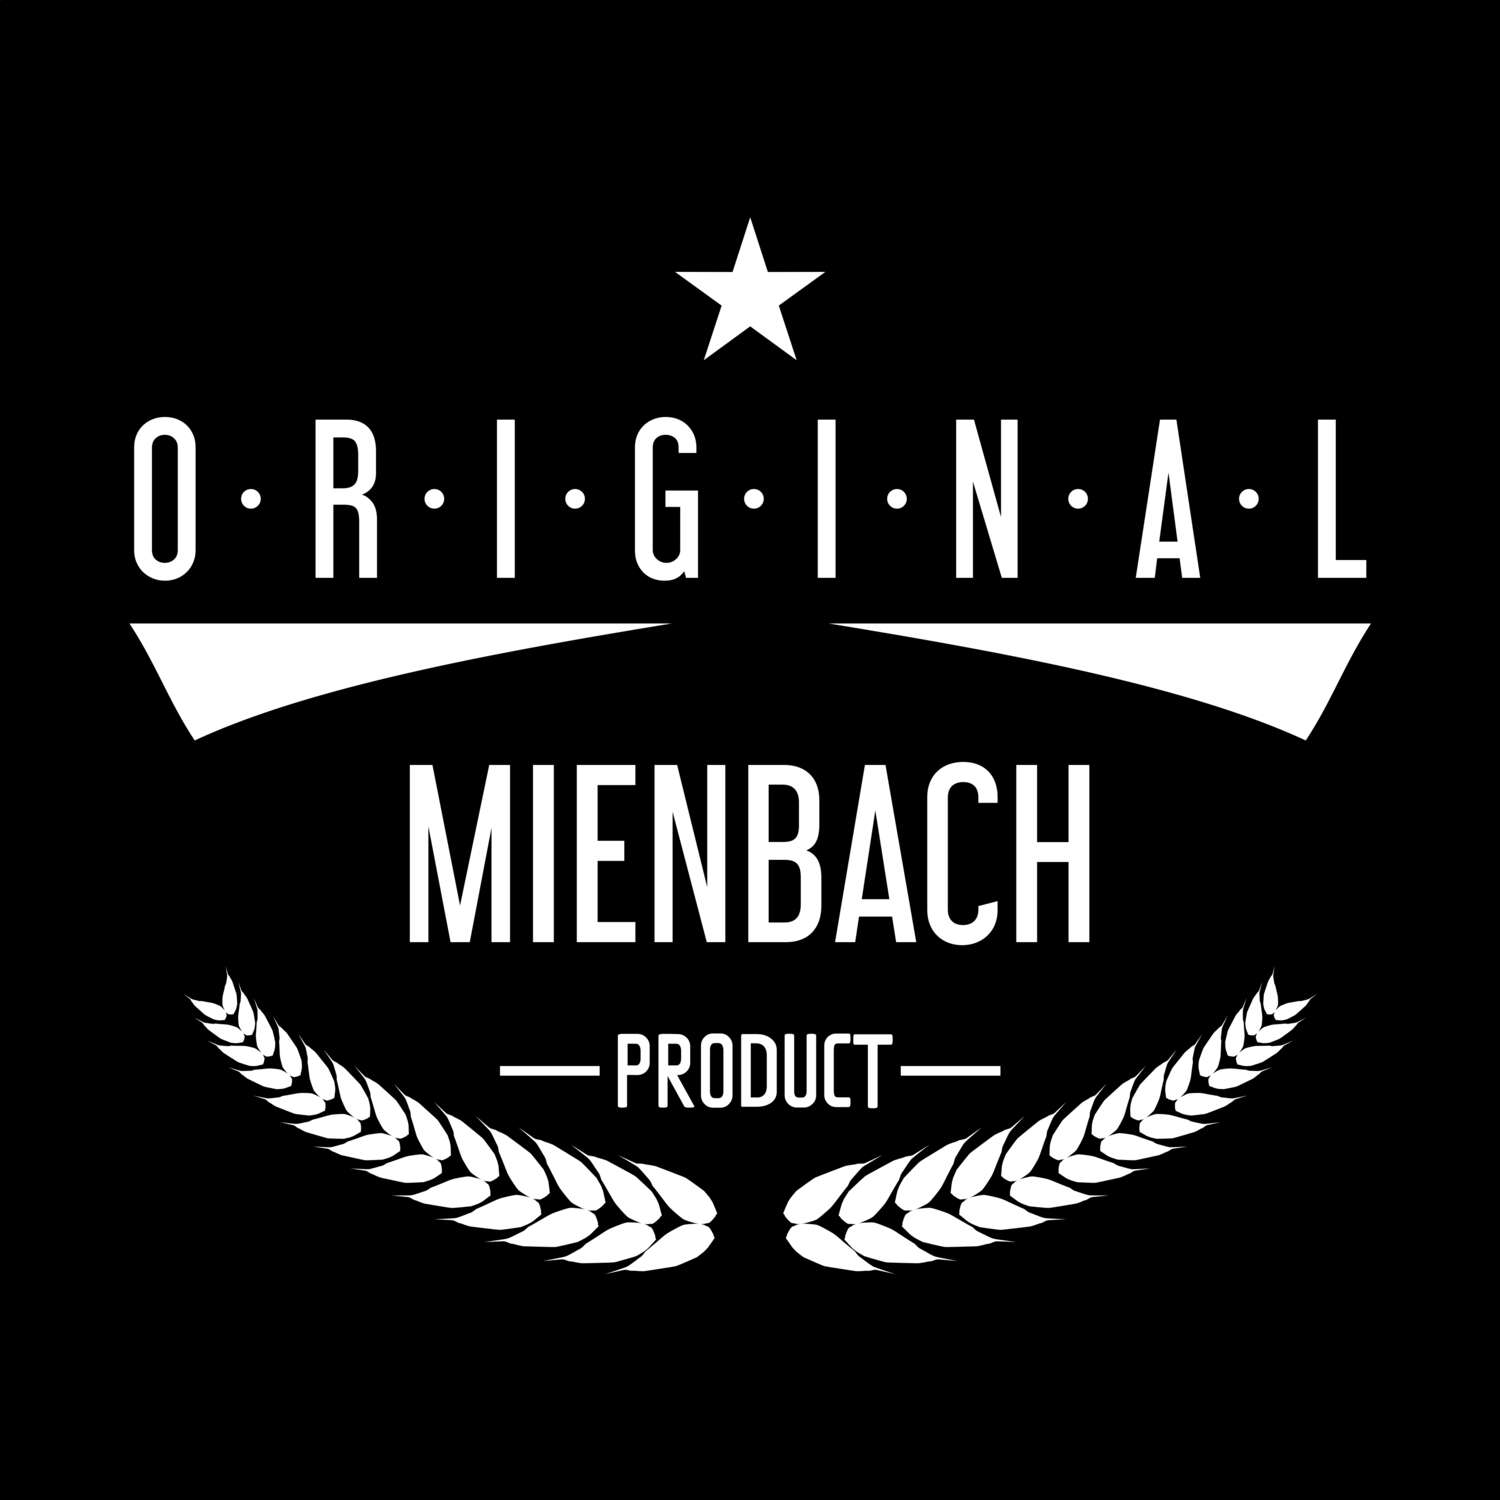 Mienbach T-Shirt »Original Product«